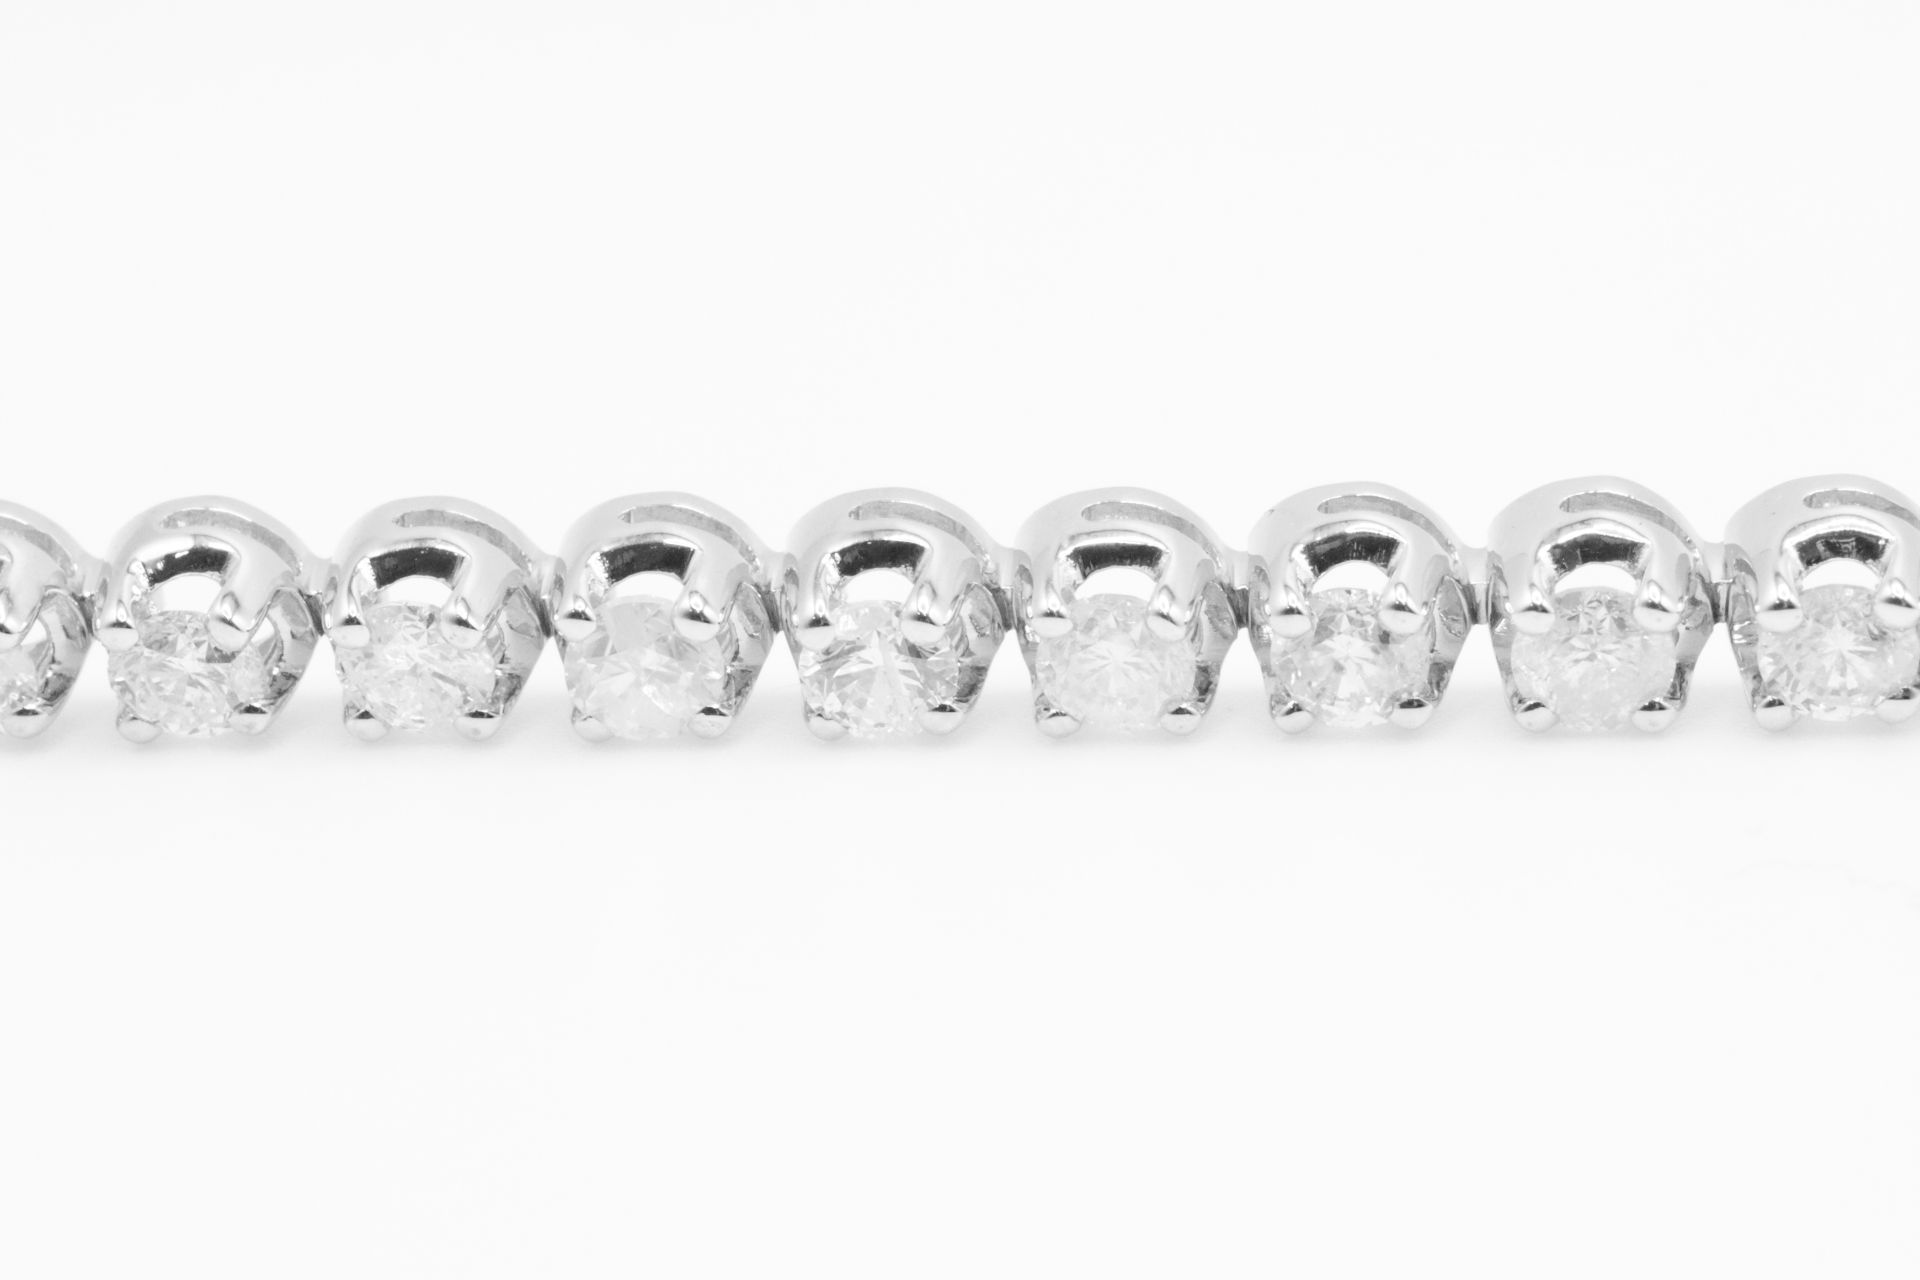 7.0 Carat 18ct White Gold Tennis Bracelet set with Round Brilliant Cut Natural Diamonds - Image 15 of 16